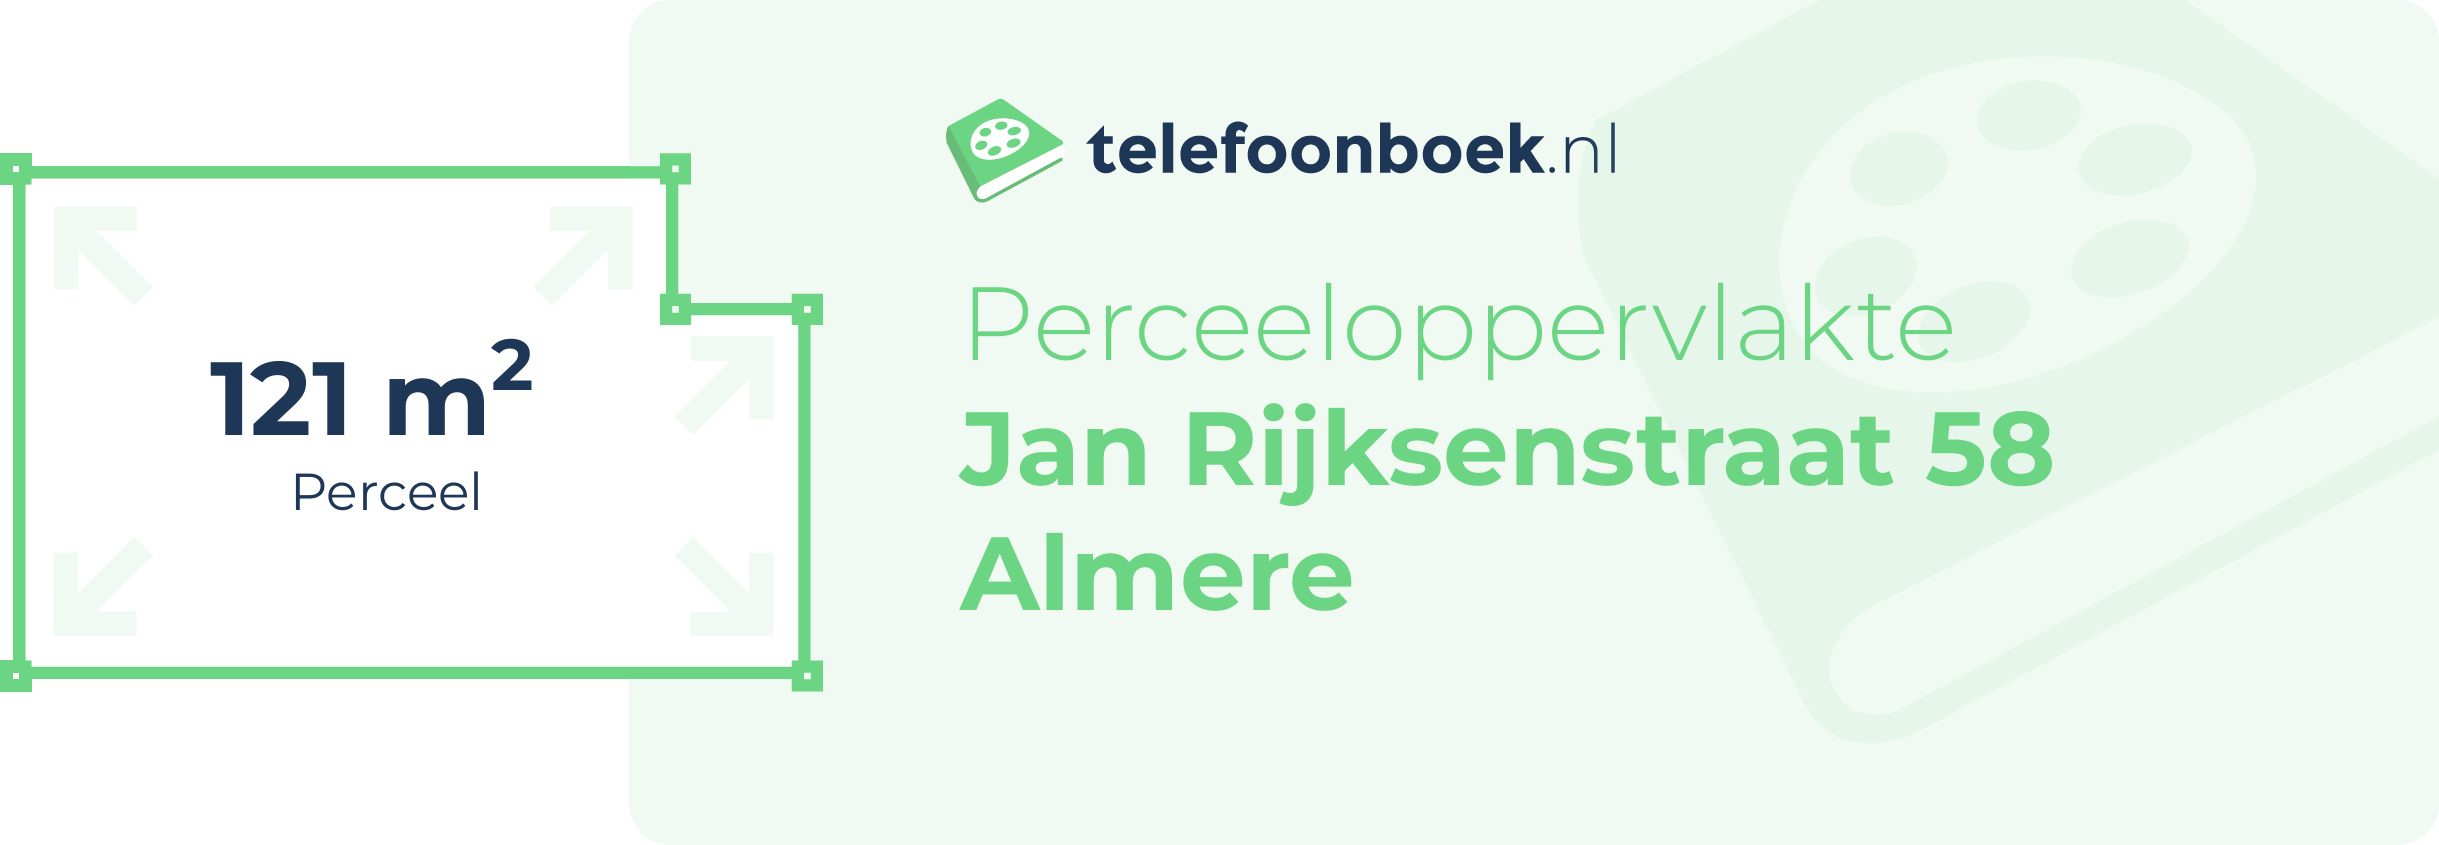 Perceeloppervlakte Jan Rijksenstraat 58 Almere